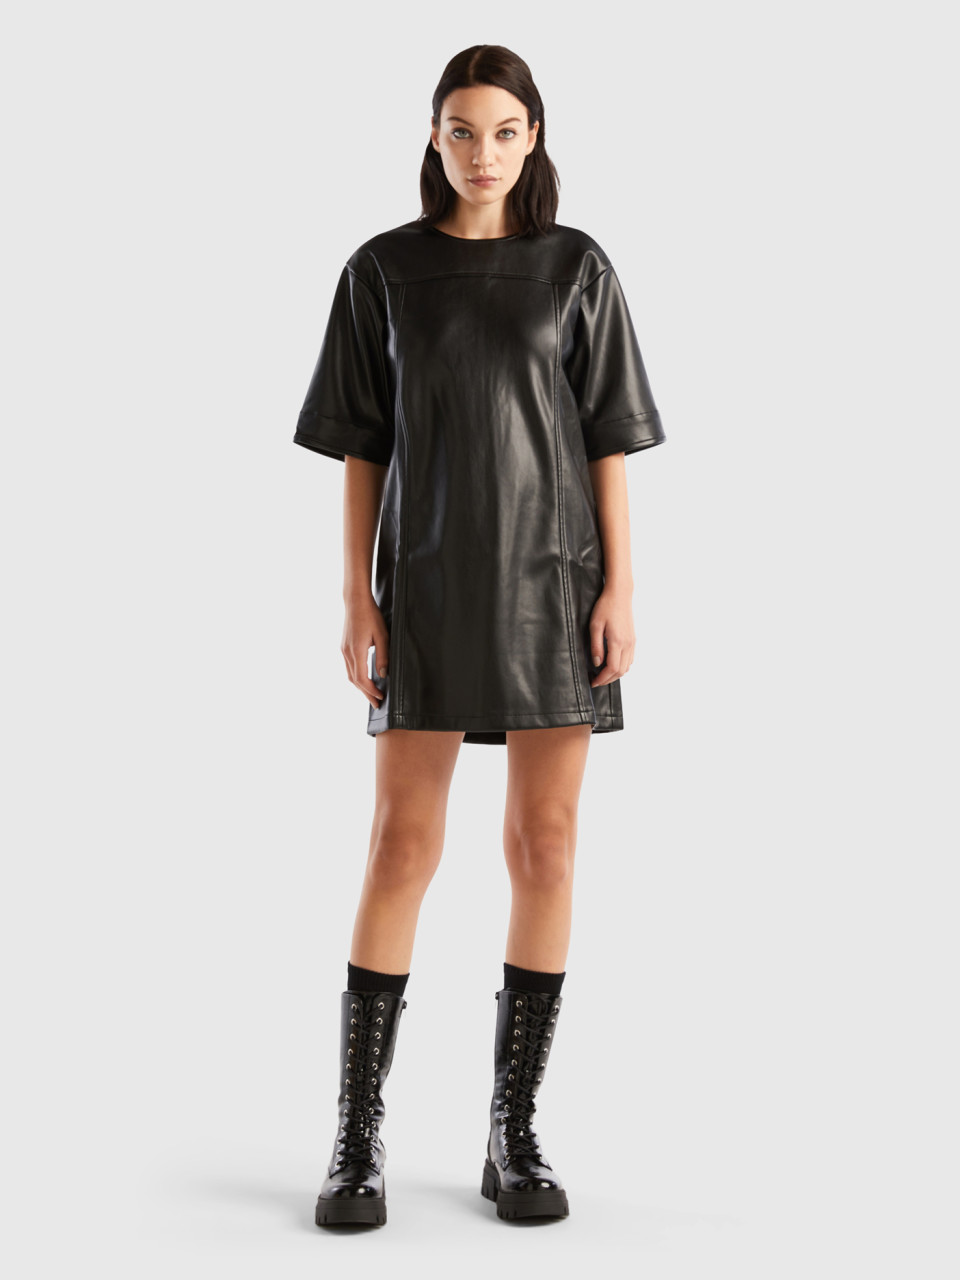 Benetton, Cropped Dress In Imitation Leather Fabric, Black, Women